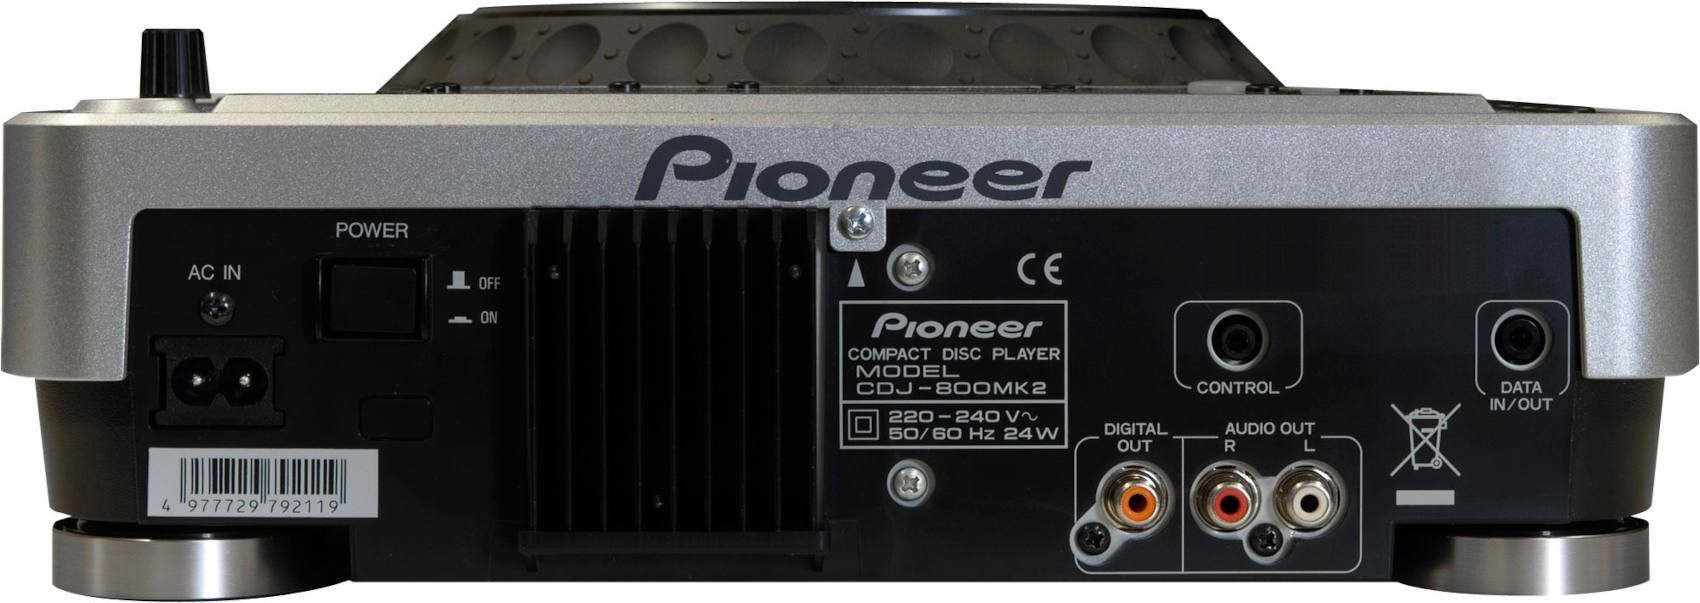 Pioneer CDJ-800 MkII - фото 3